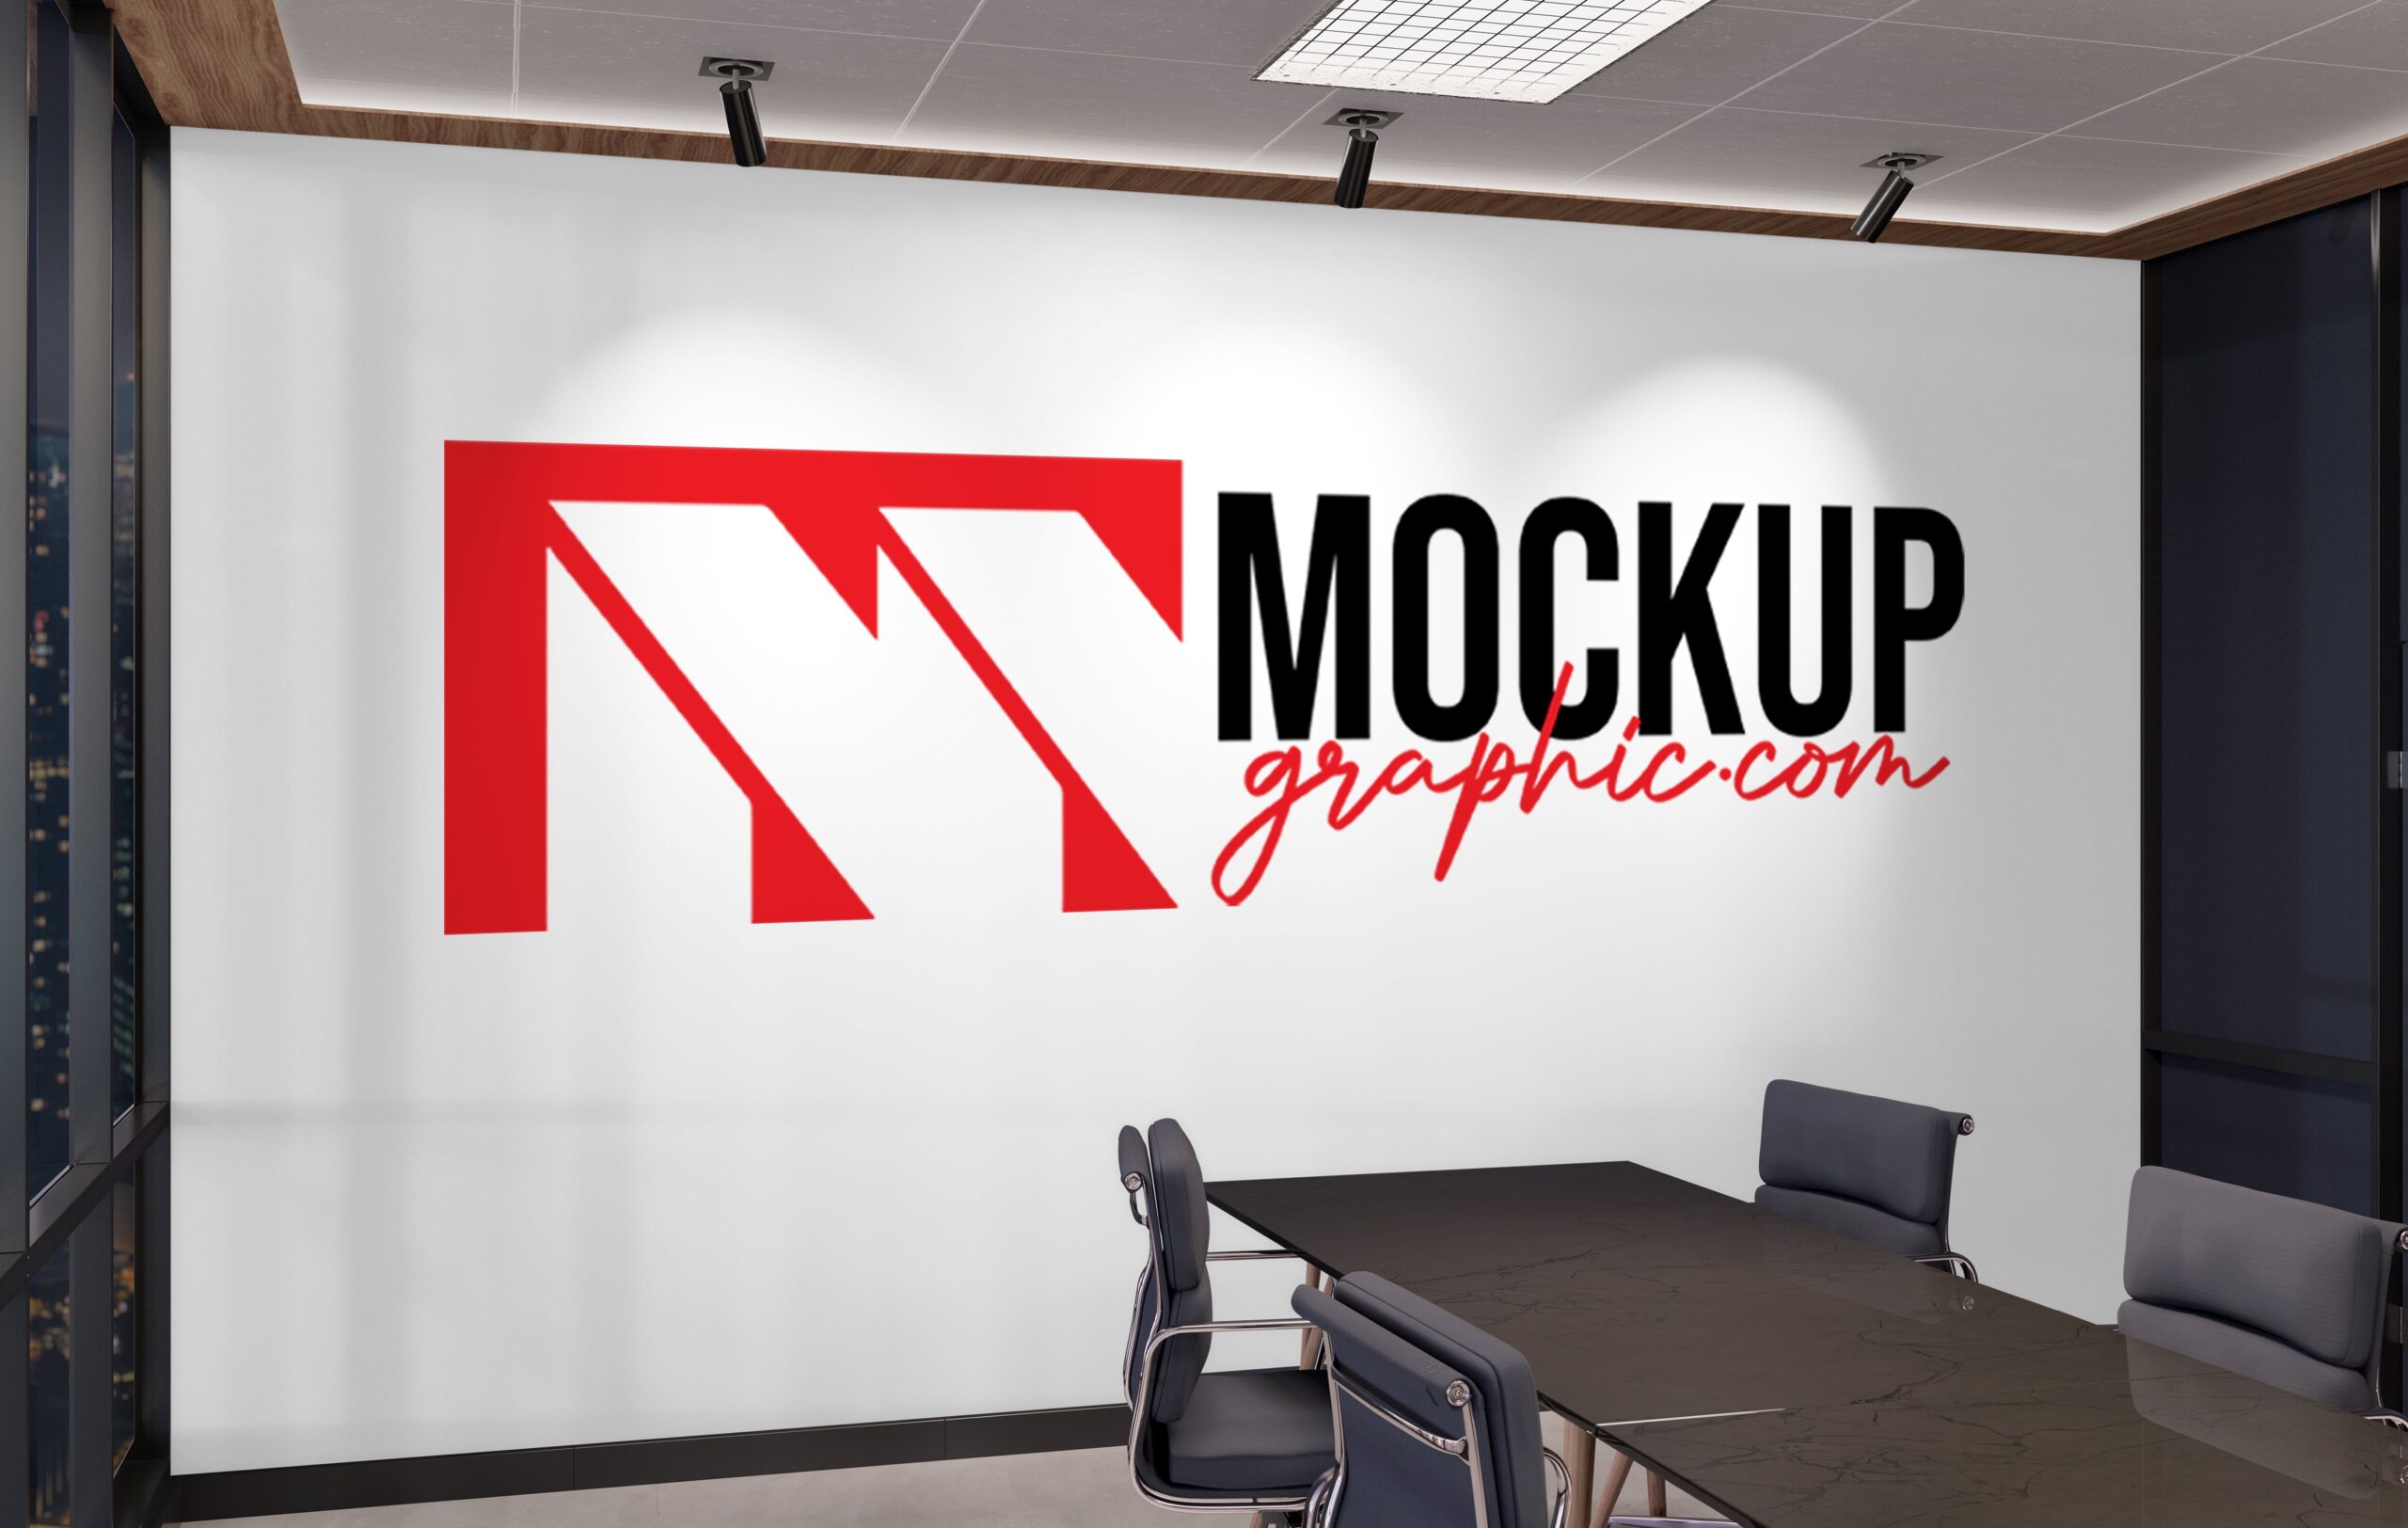 Premium_ Office_ Wall_ Interior_ Logo_ Mockup_Design_www.mockupgraphic.com